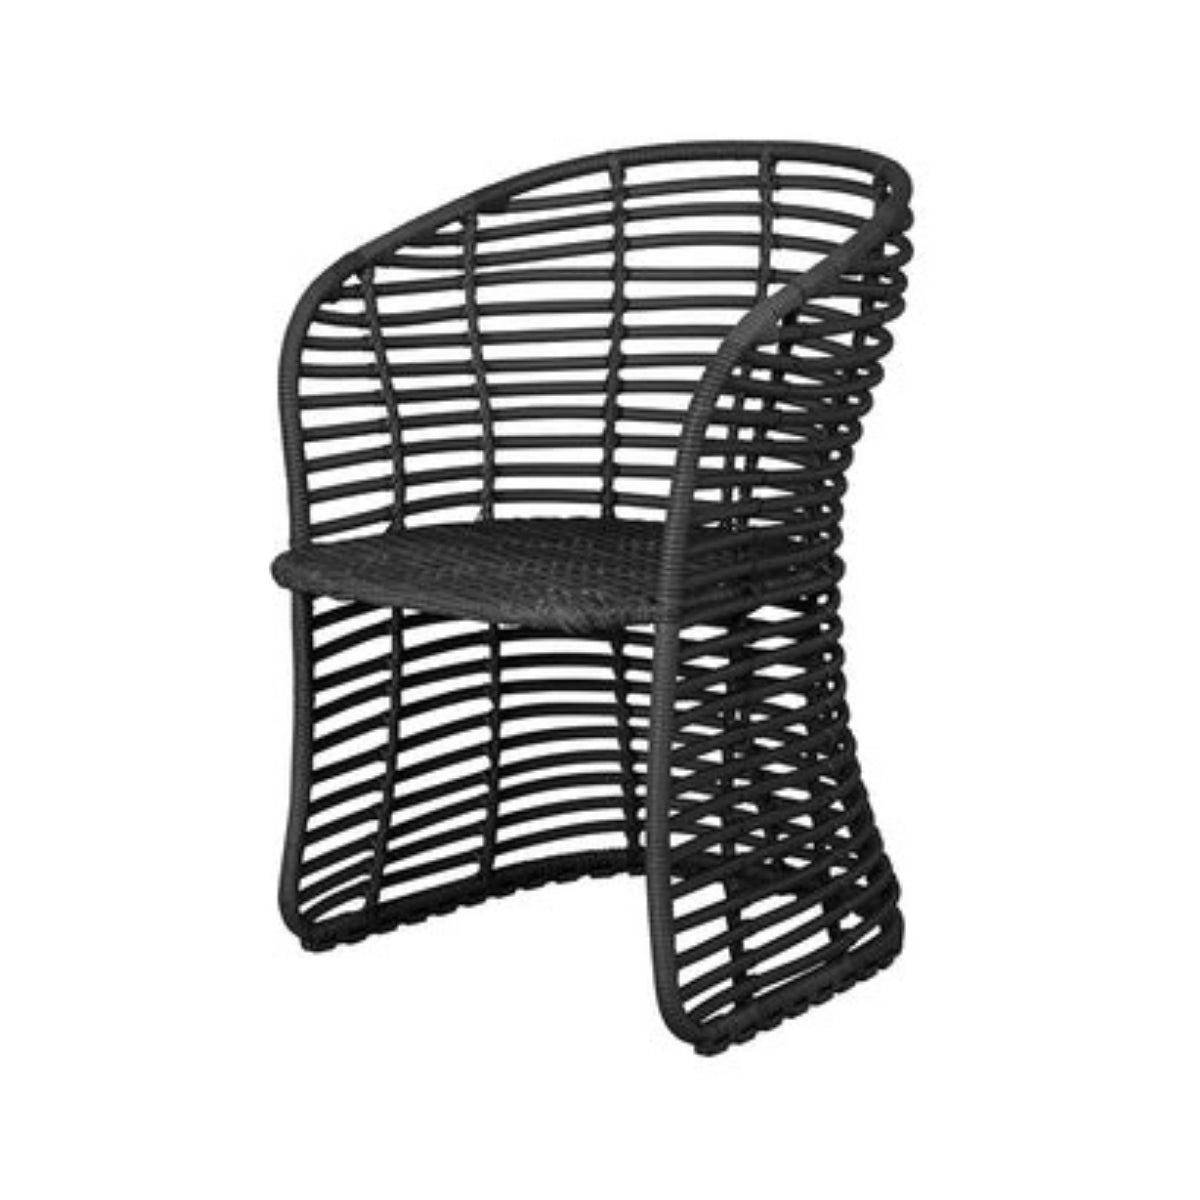 Cane-line | Basket chair - Bolighuset Werenberg 